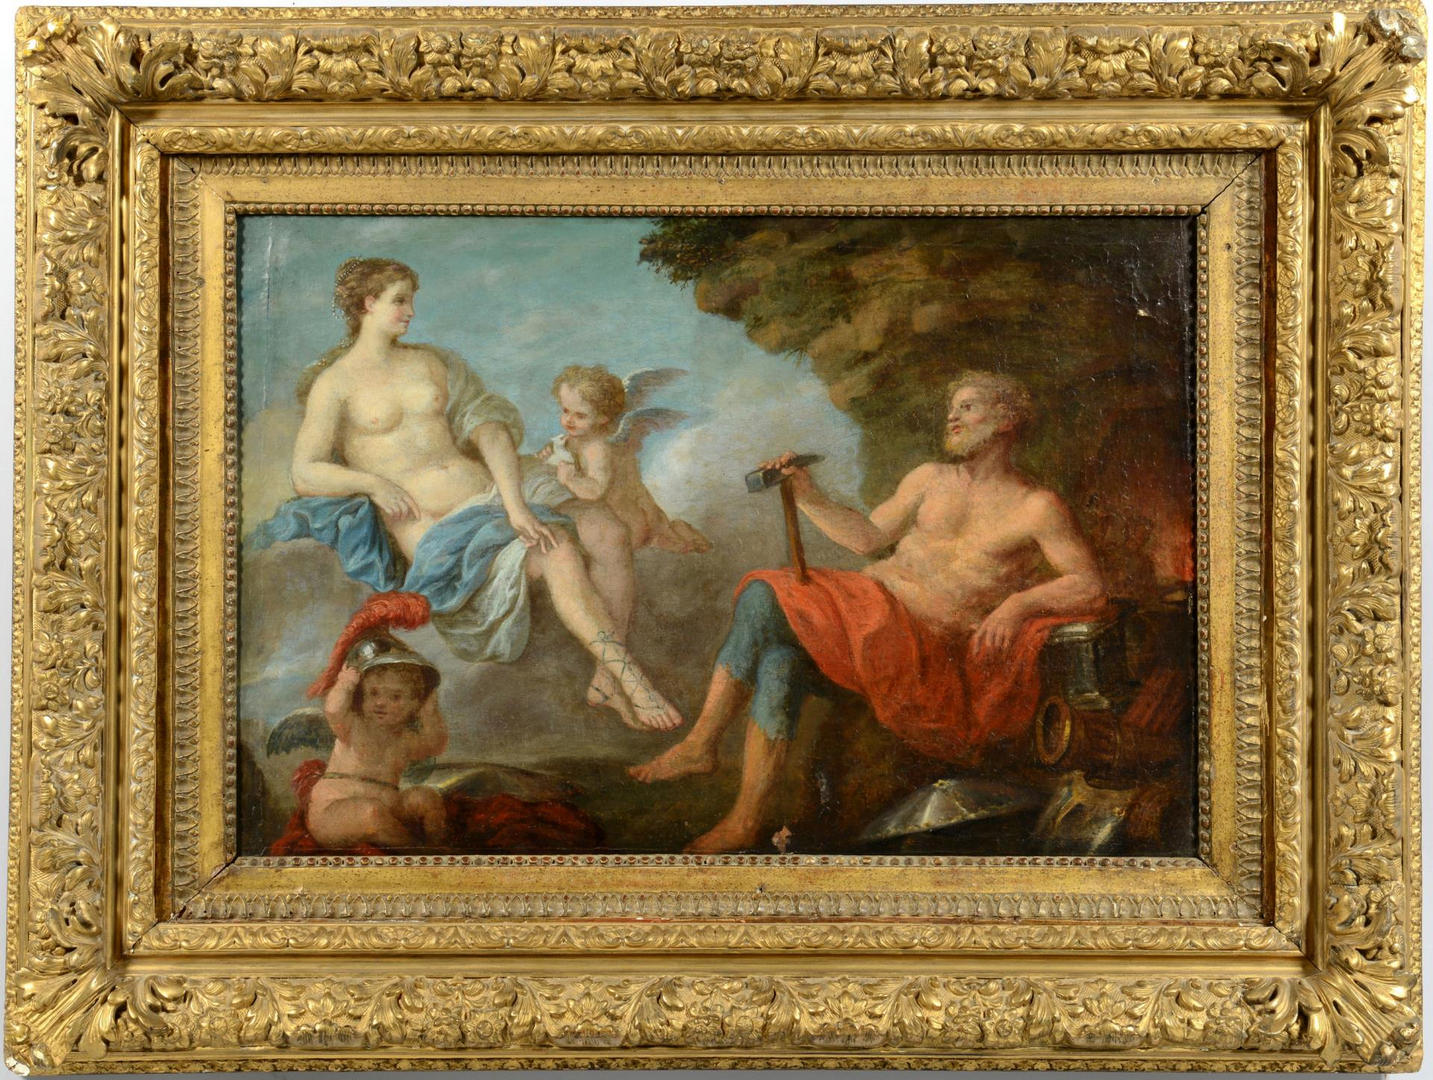 Lot 672: French School 18th c., Venus & Vulcan mythological